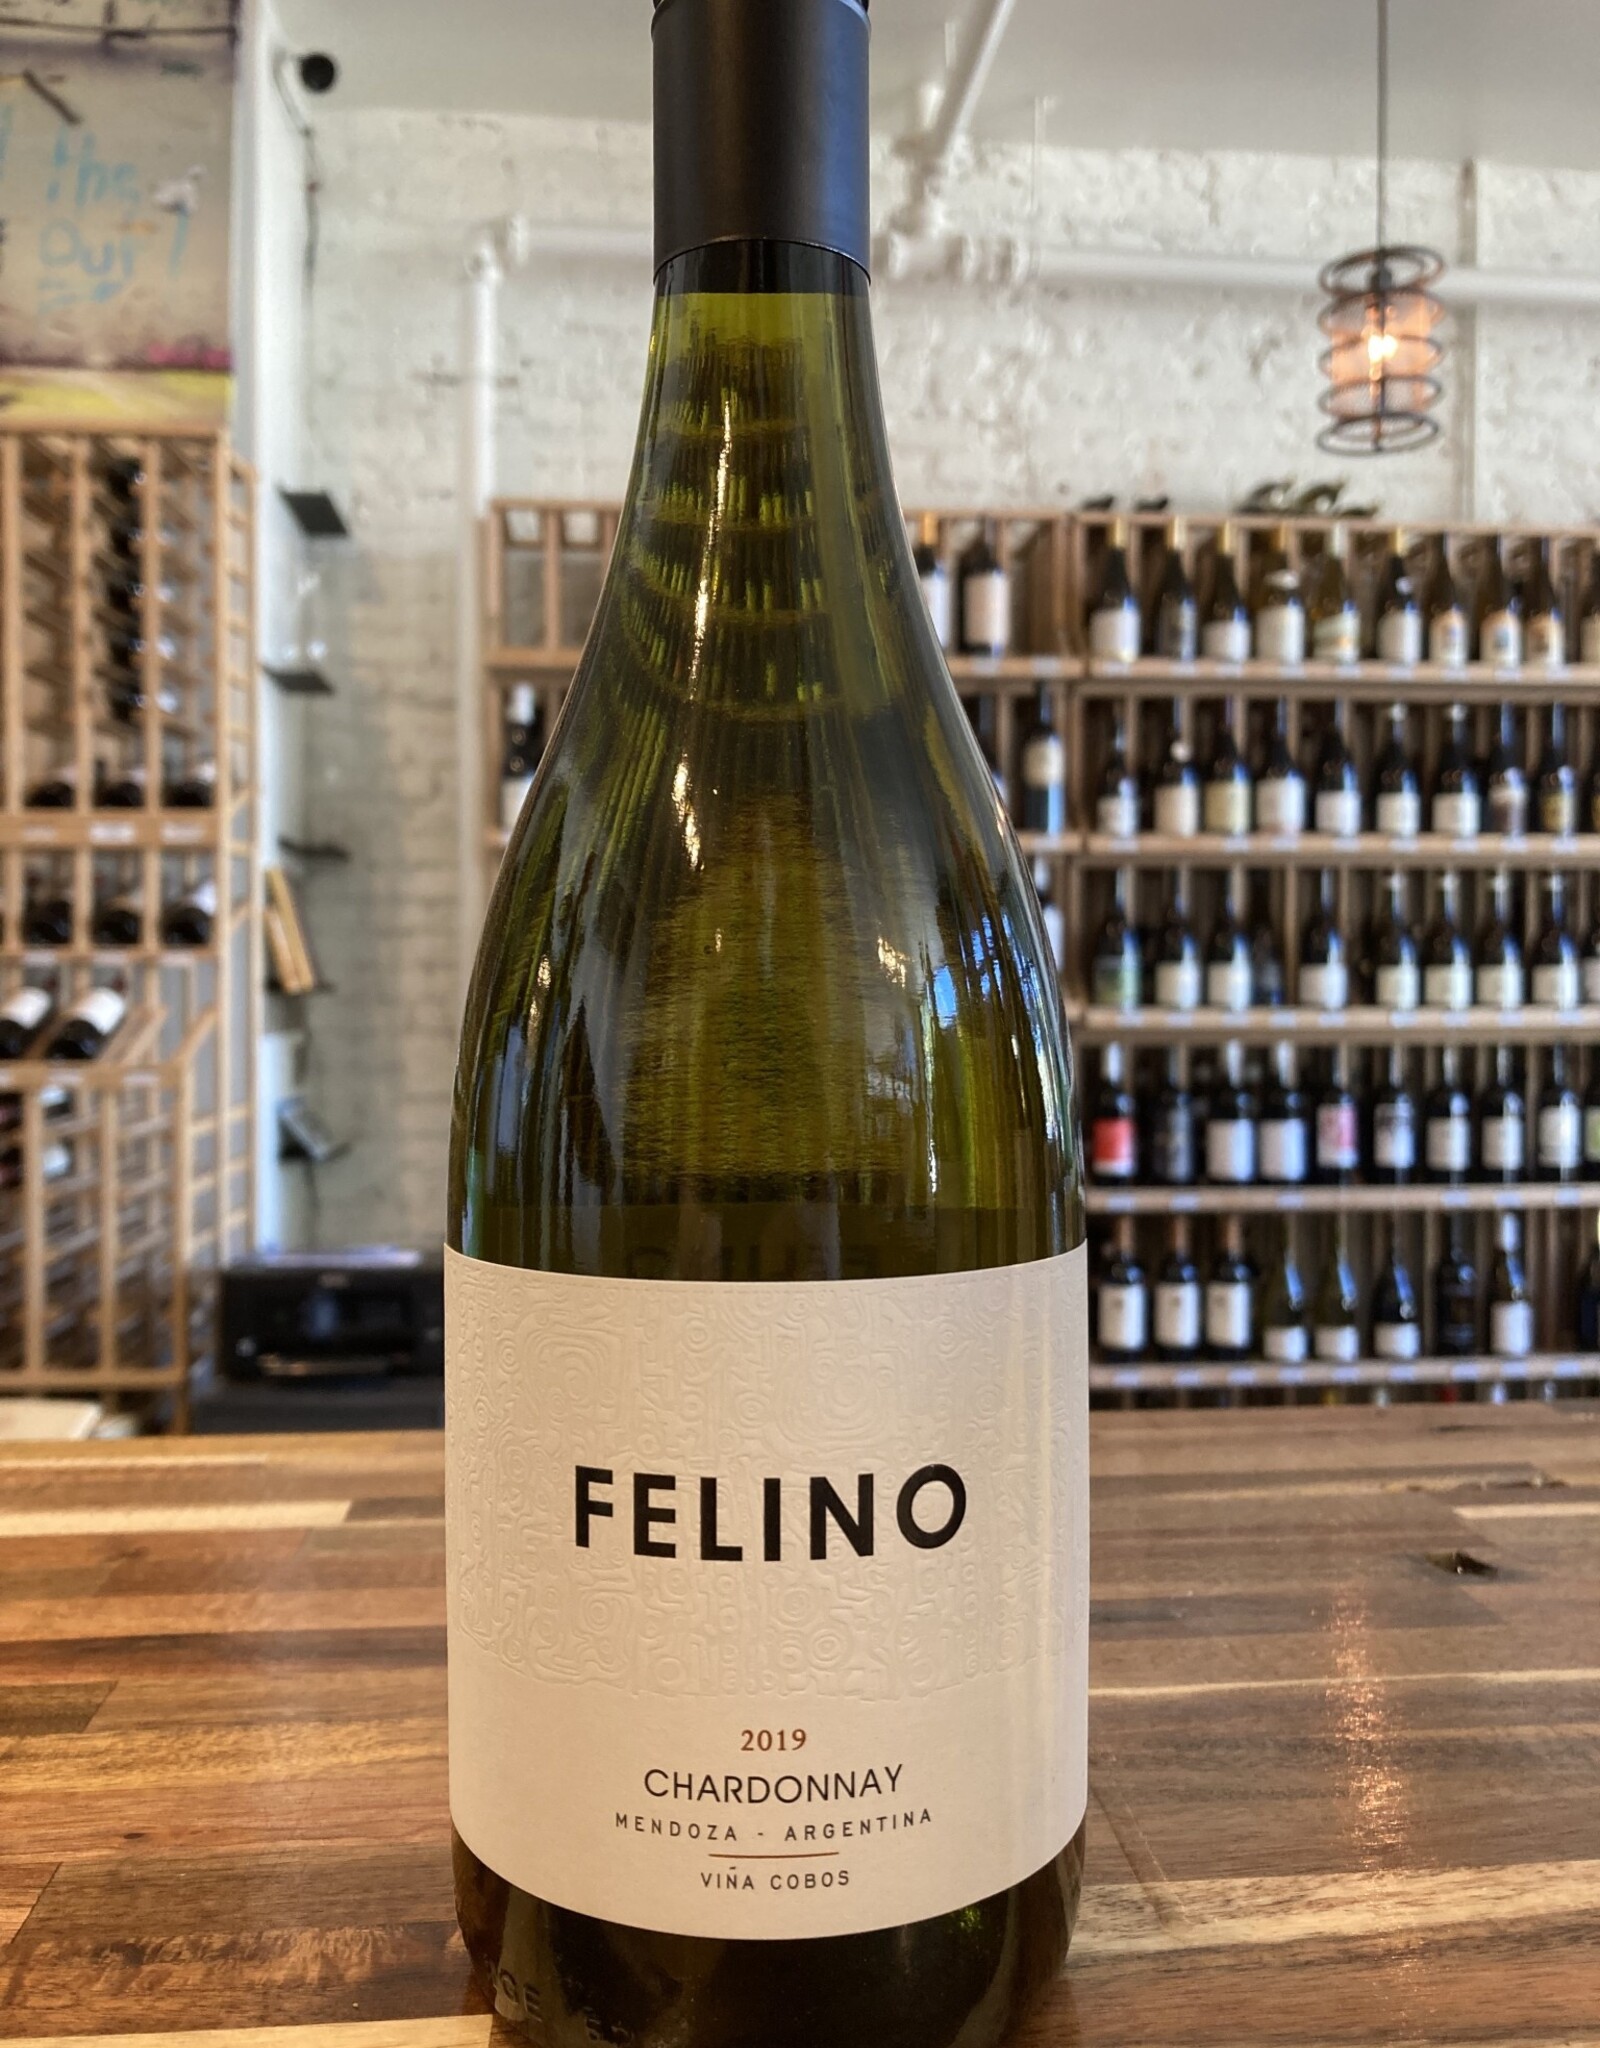 Cobos Chardonnay "Felino" 2019, Argentina